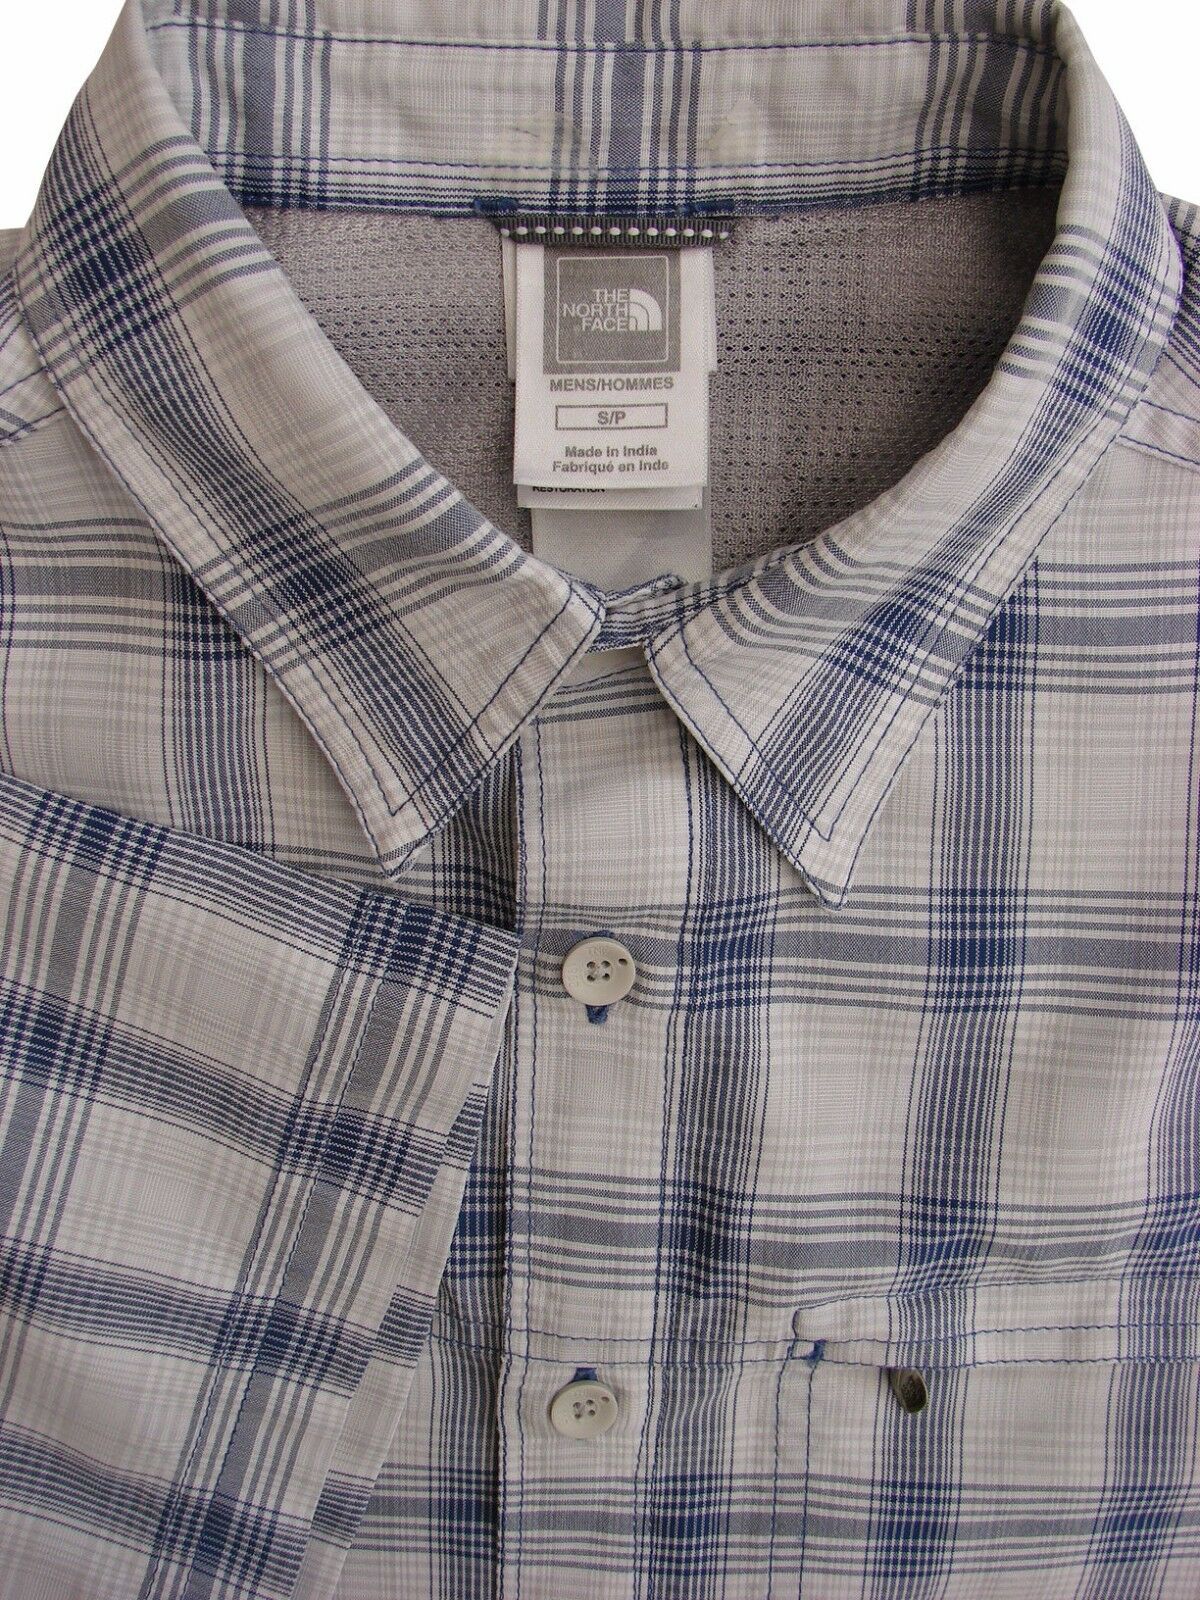 THE NORTH FACE Shirt Mens 15.5 S White Grey & Blue Check SHORT SLEEVE -  Brandinity